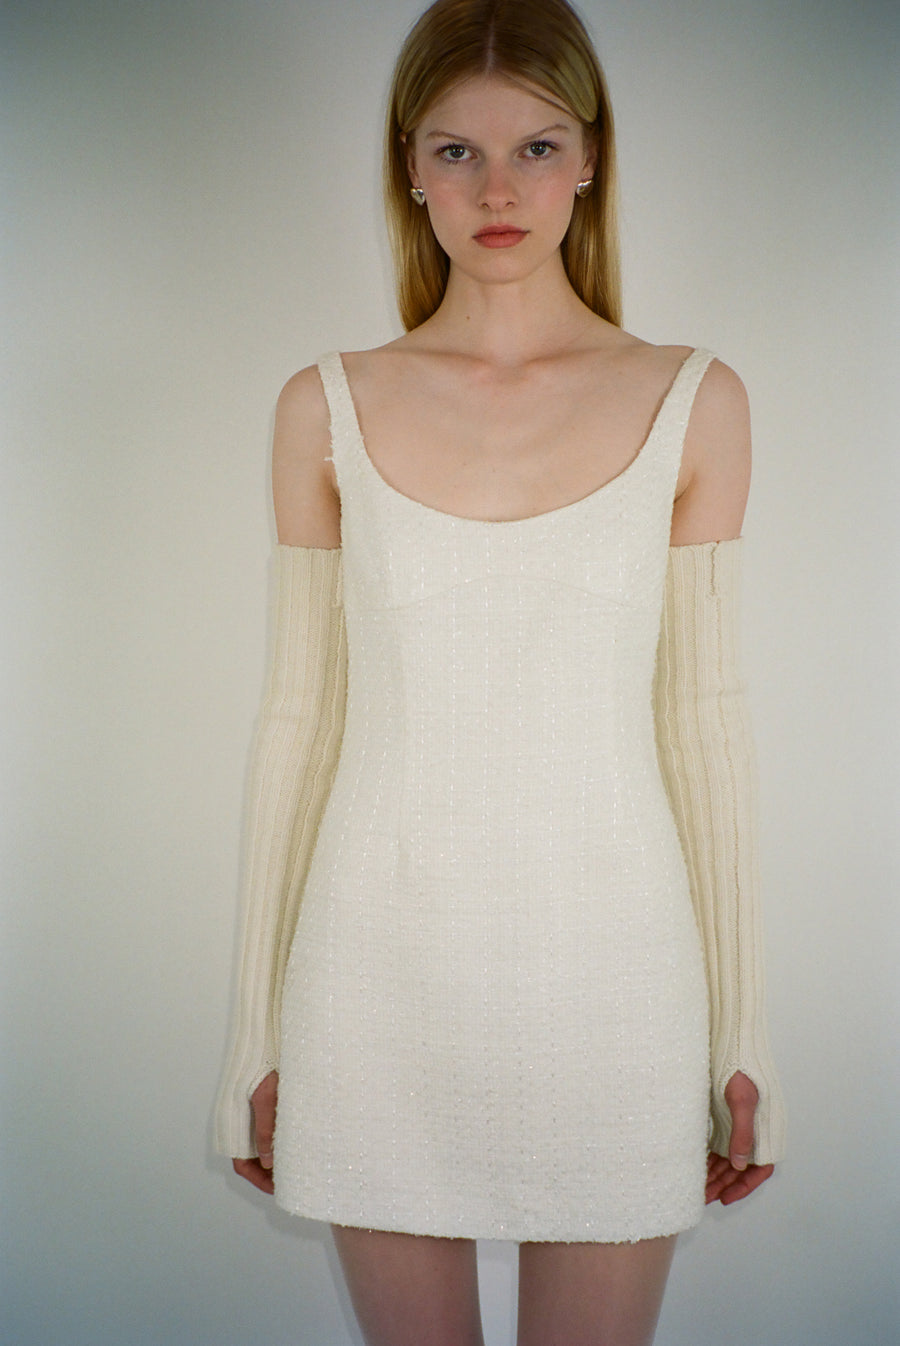 Sleeveless mini dress in off white tweed on model